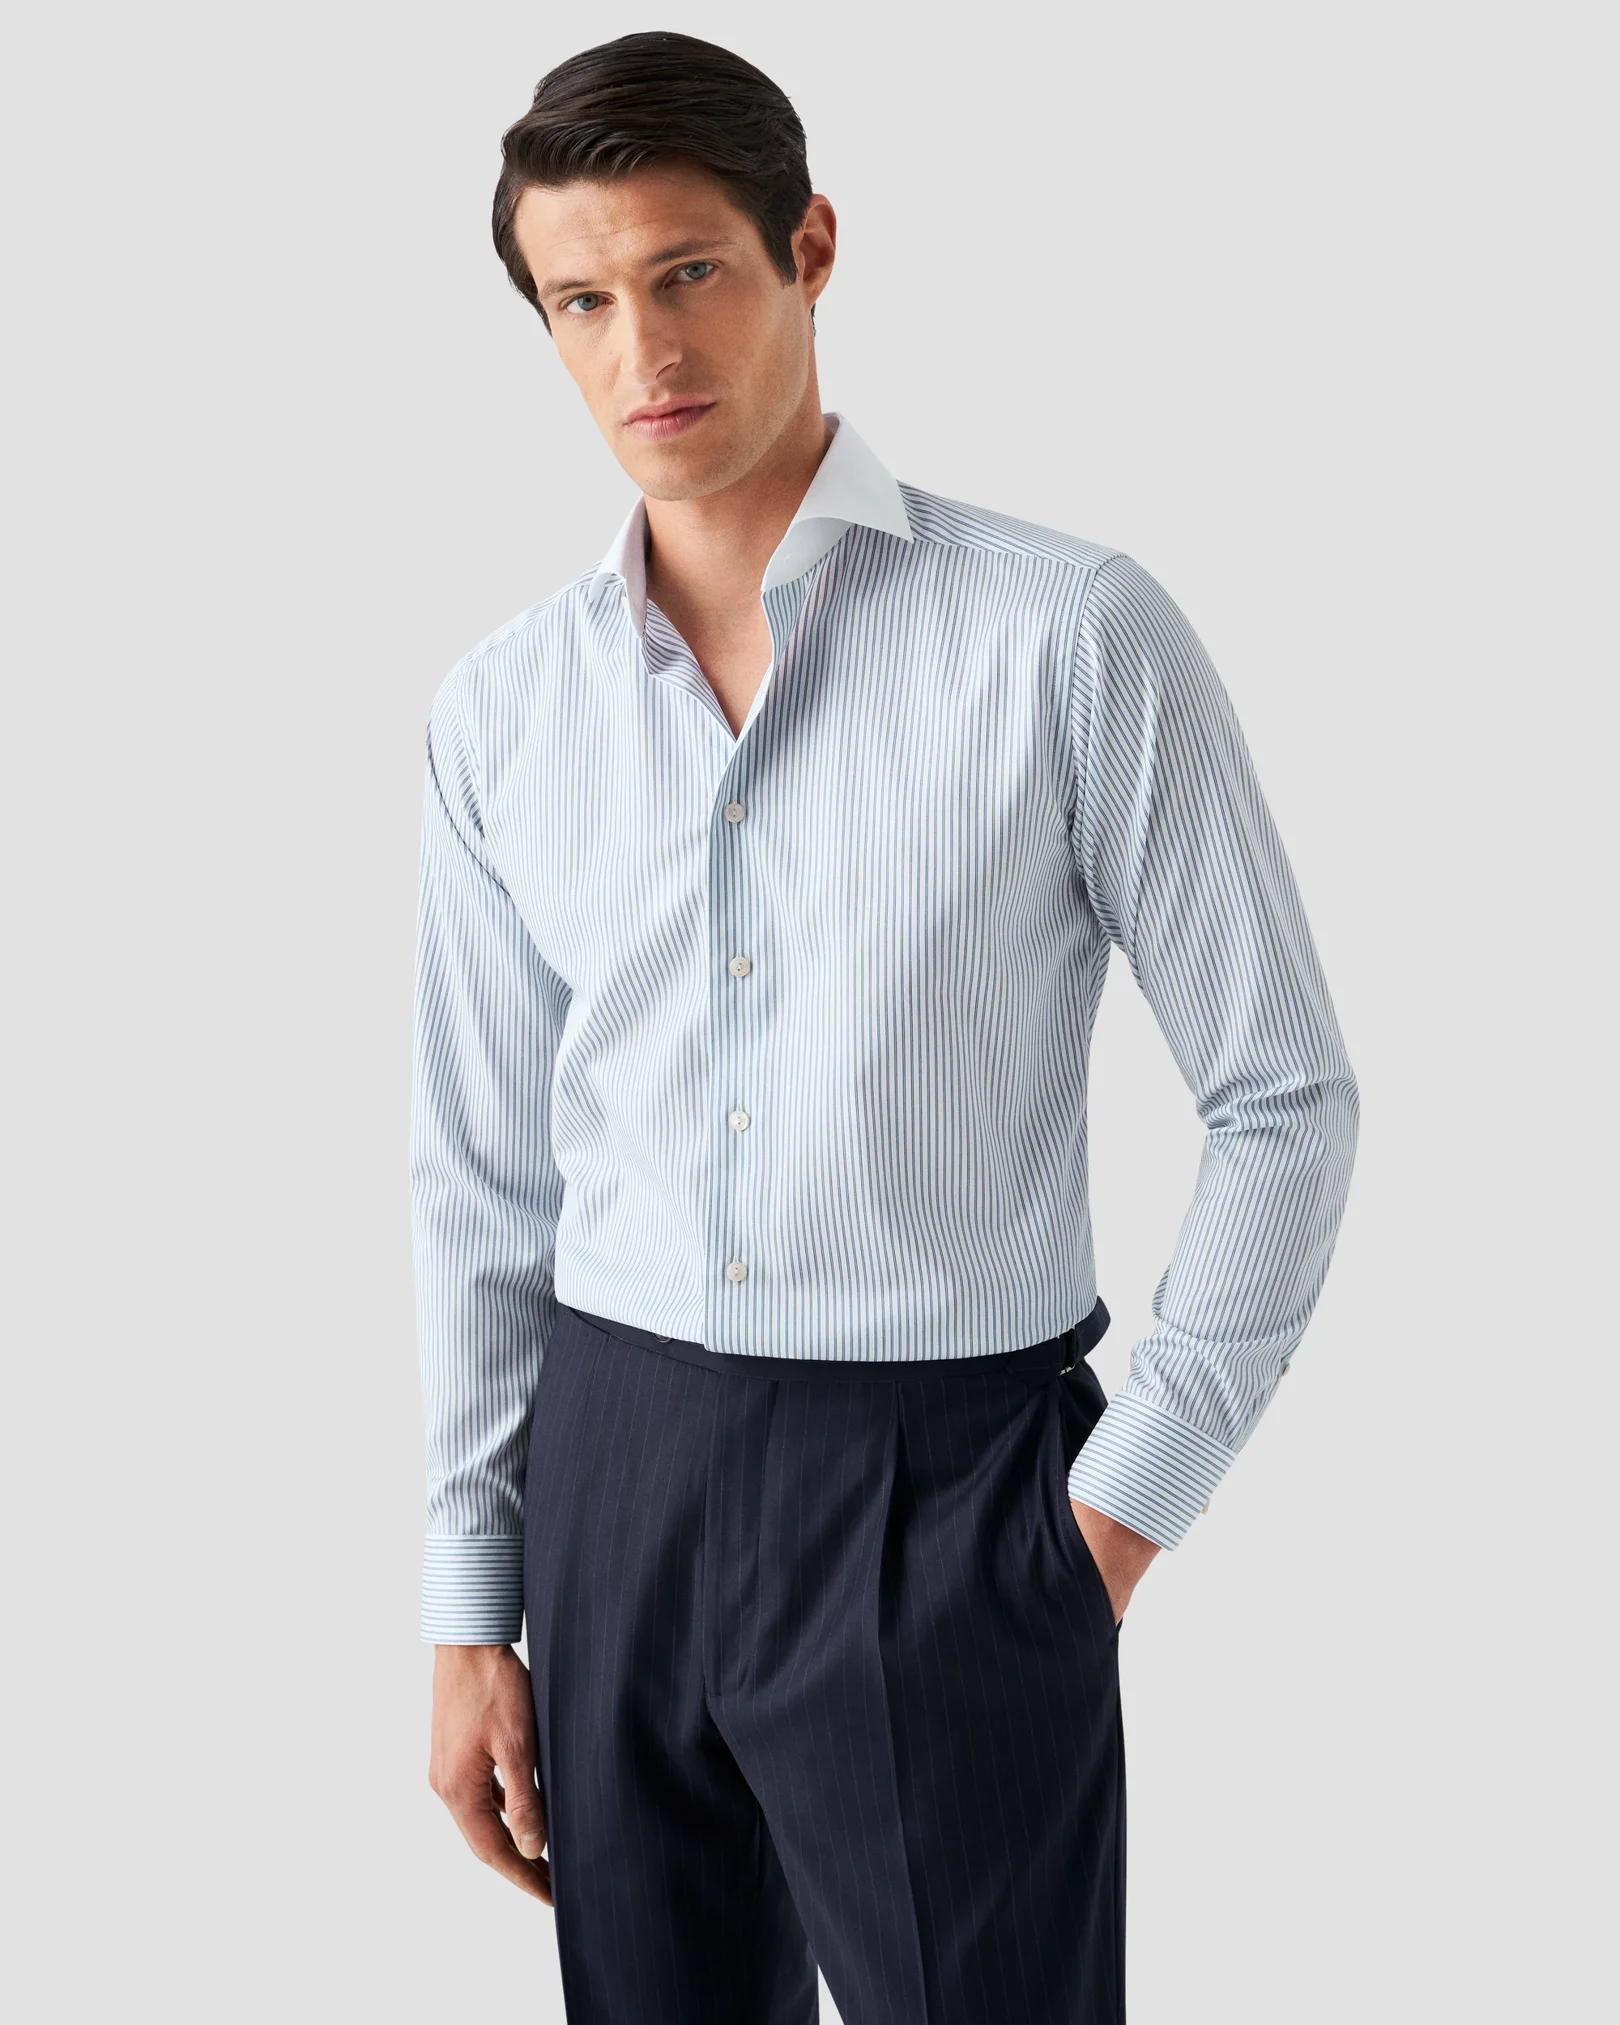 Eton - mid blue wide spread cotton tencel shirt